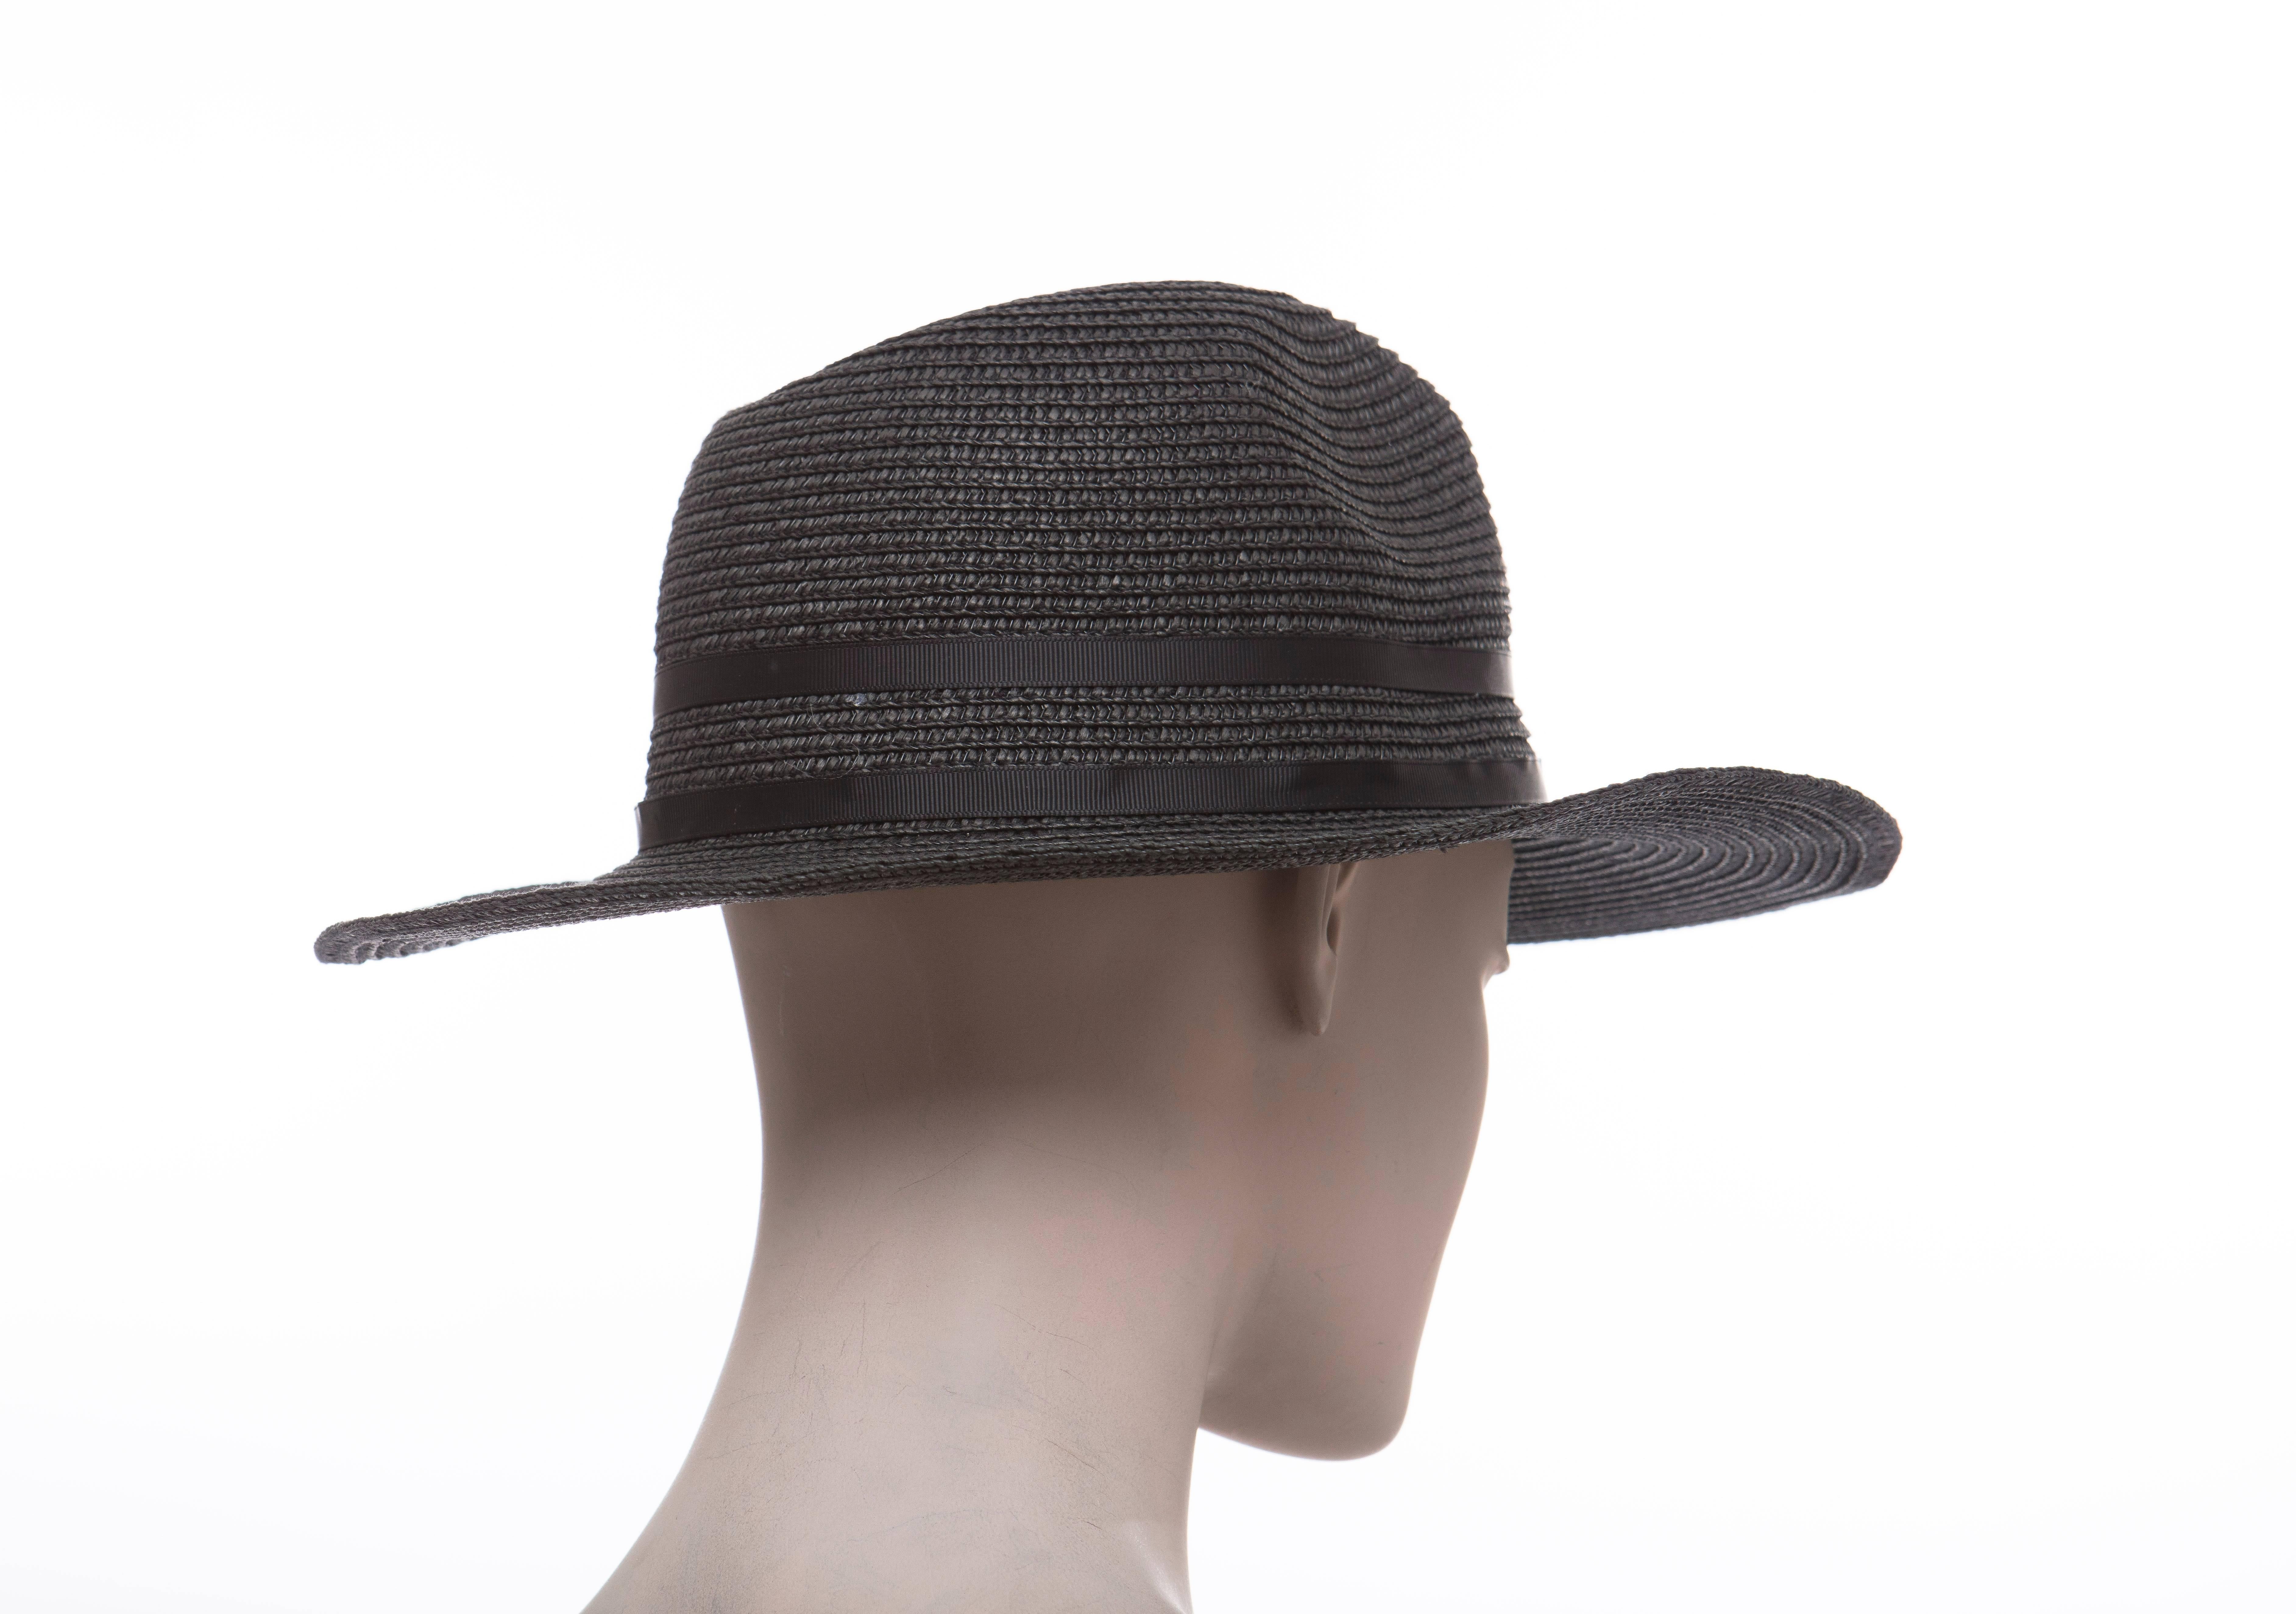 Yves Saint Laurent Black Straw Hat With Crystal Stars And Black Grosgrain Trim 1